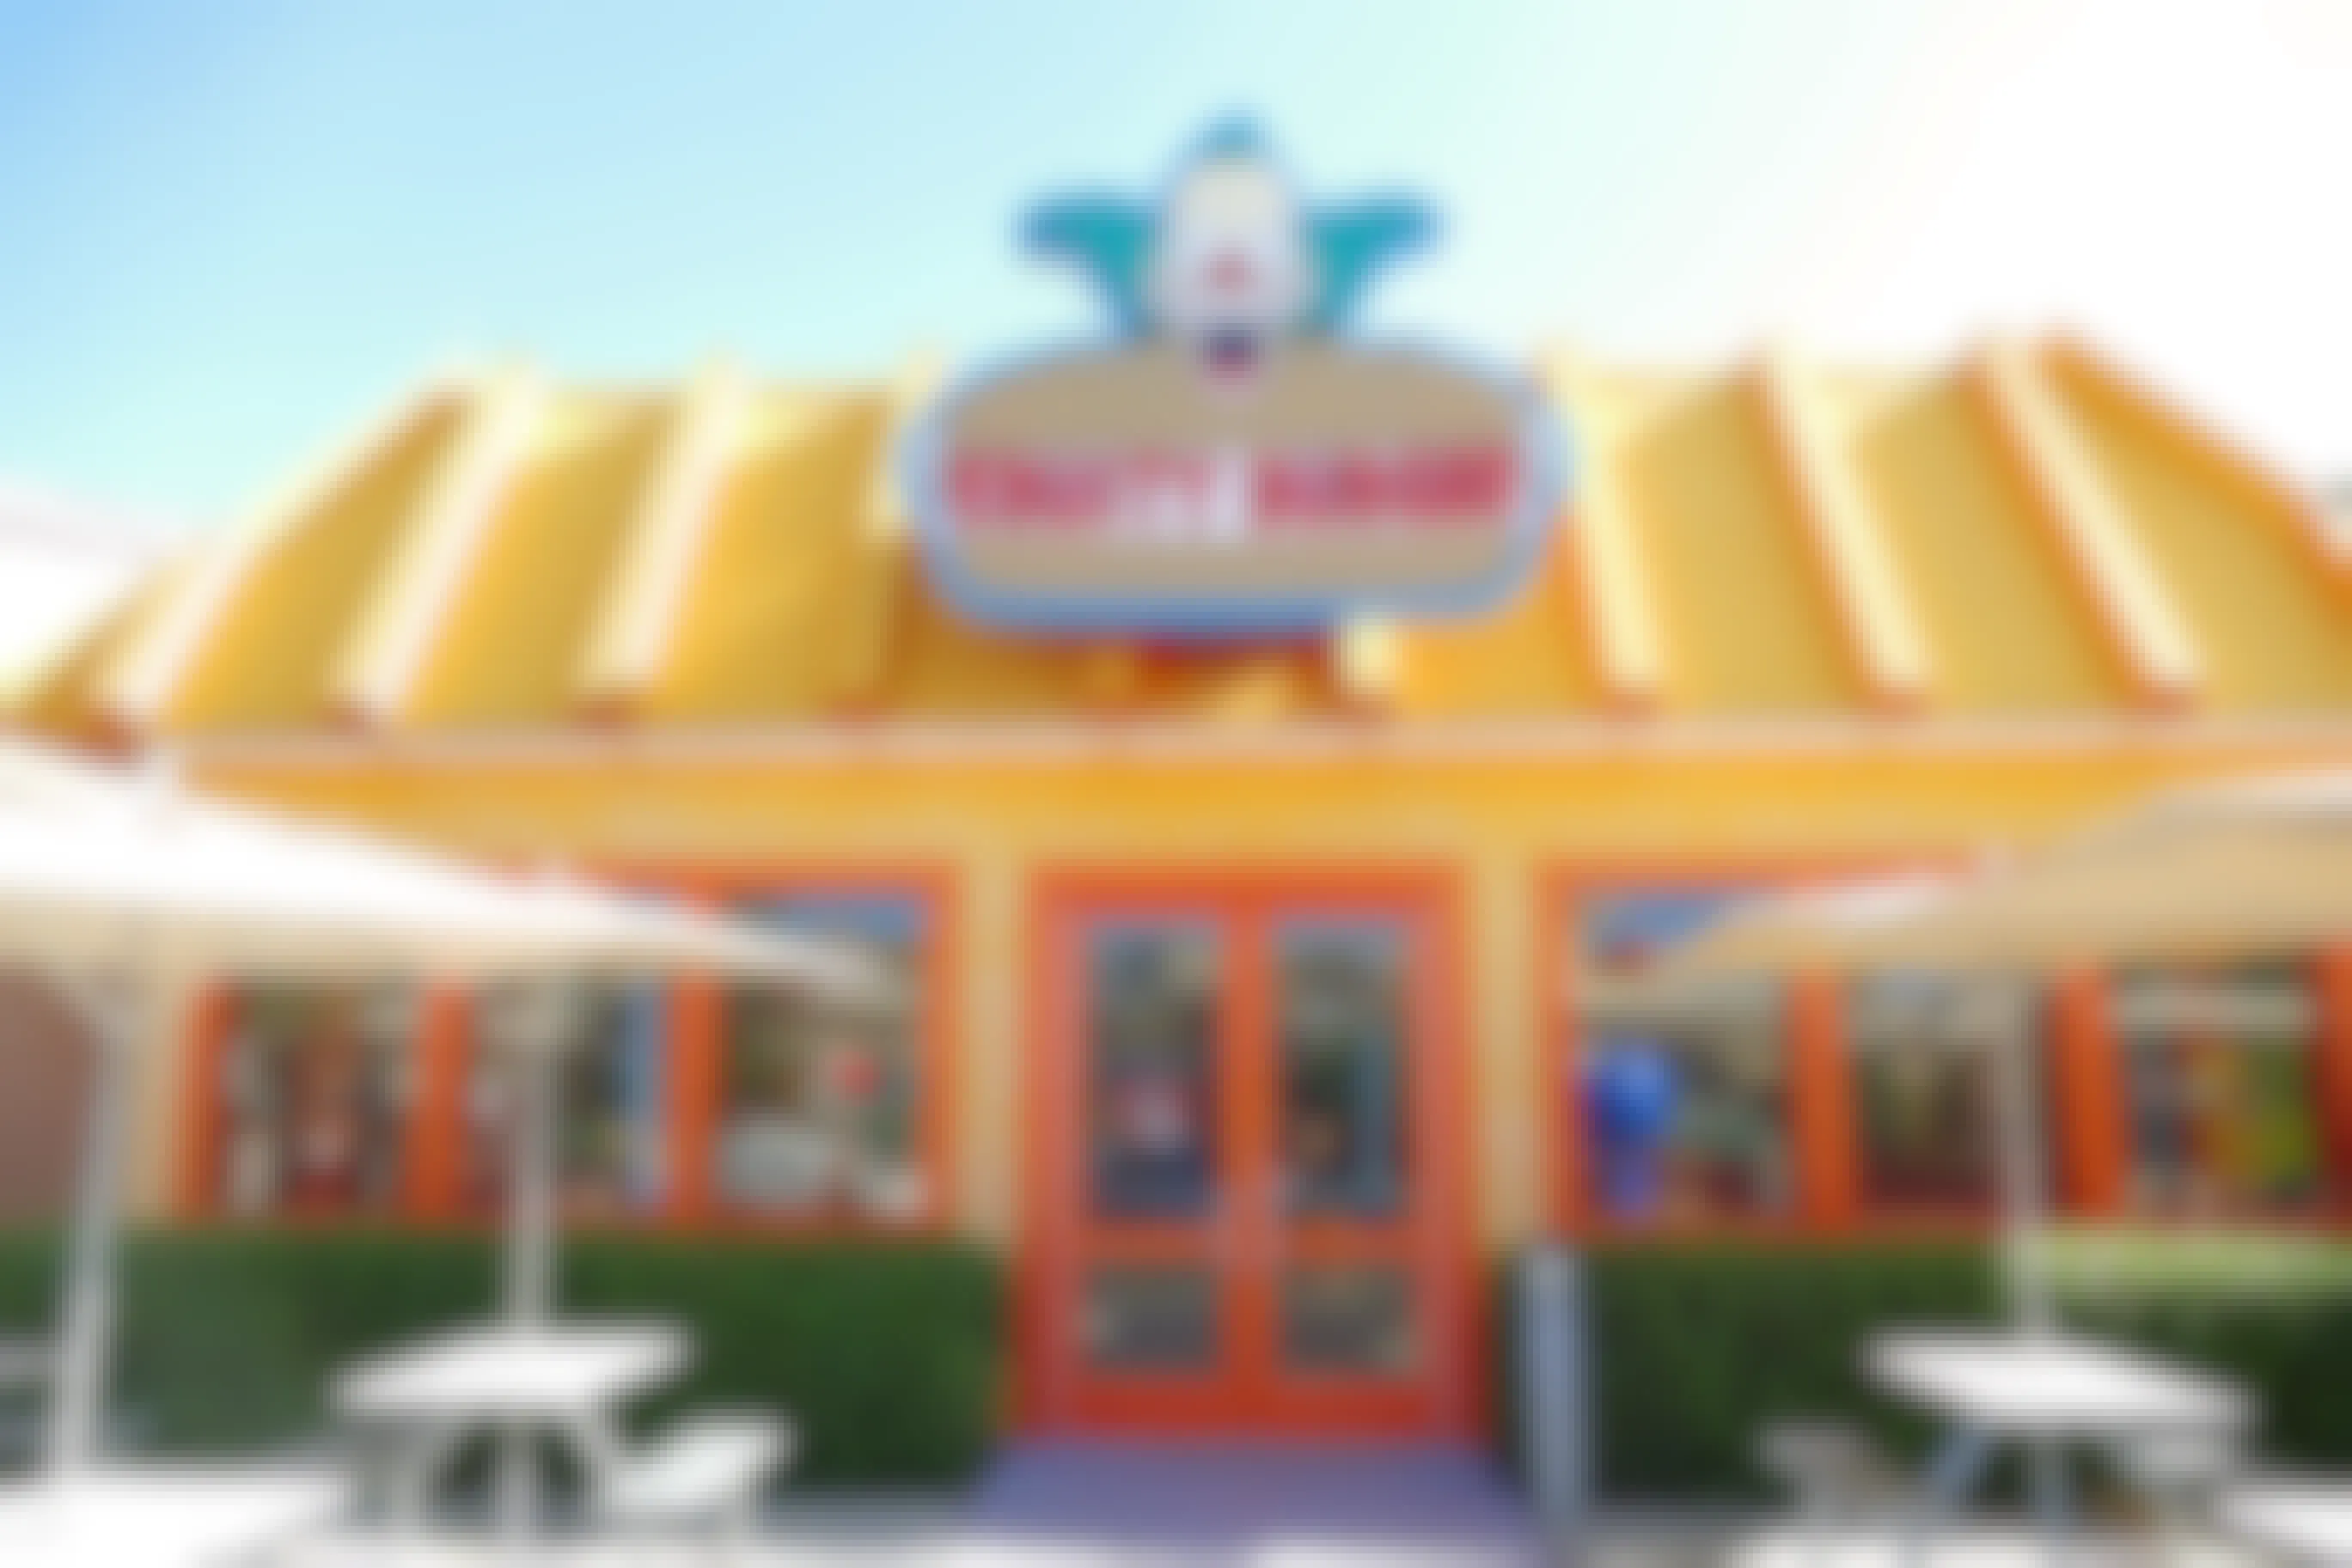 Universal Studios Krusty Burger 